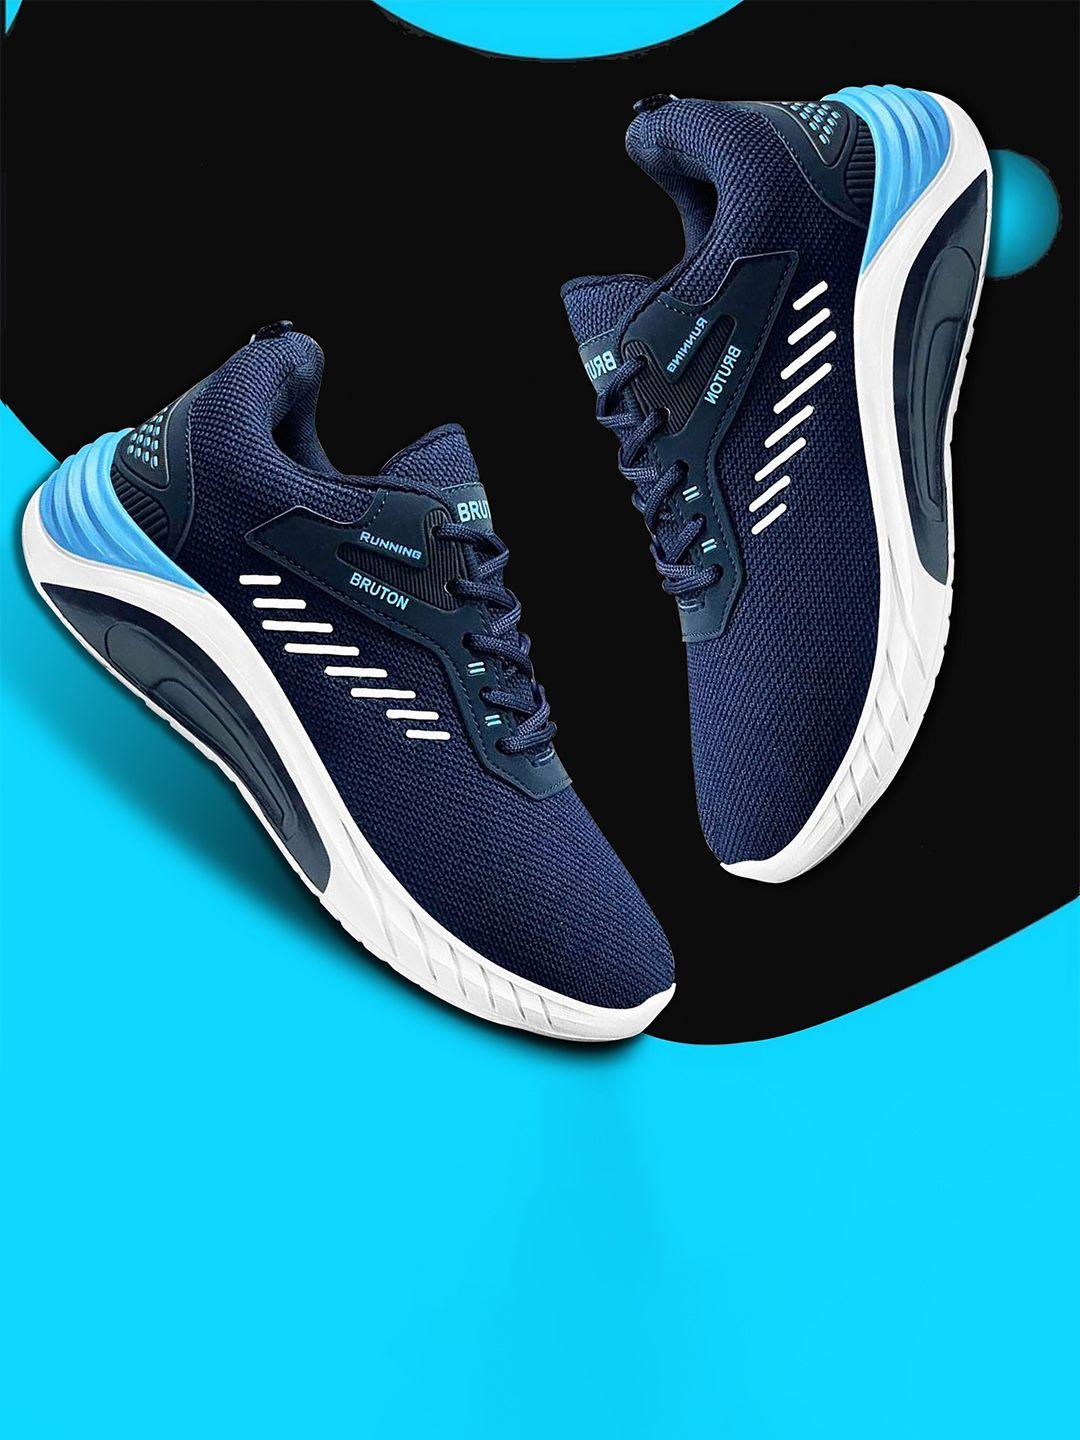 bruton-men-blue-mesh-running-shoes